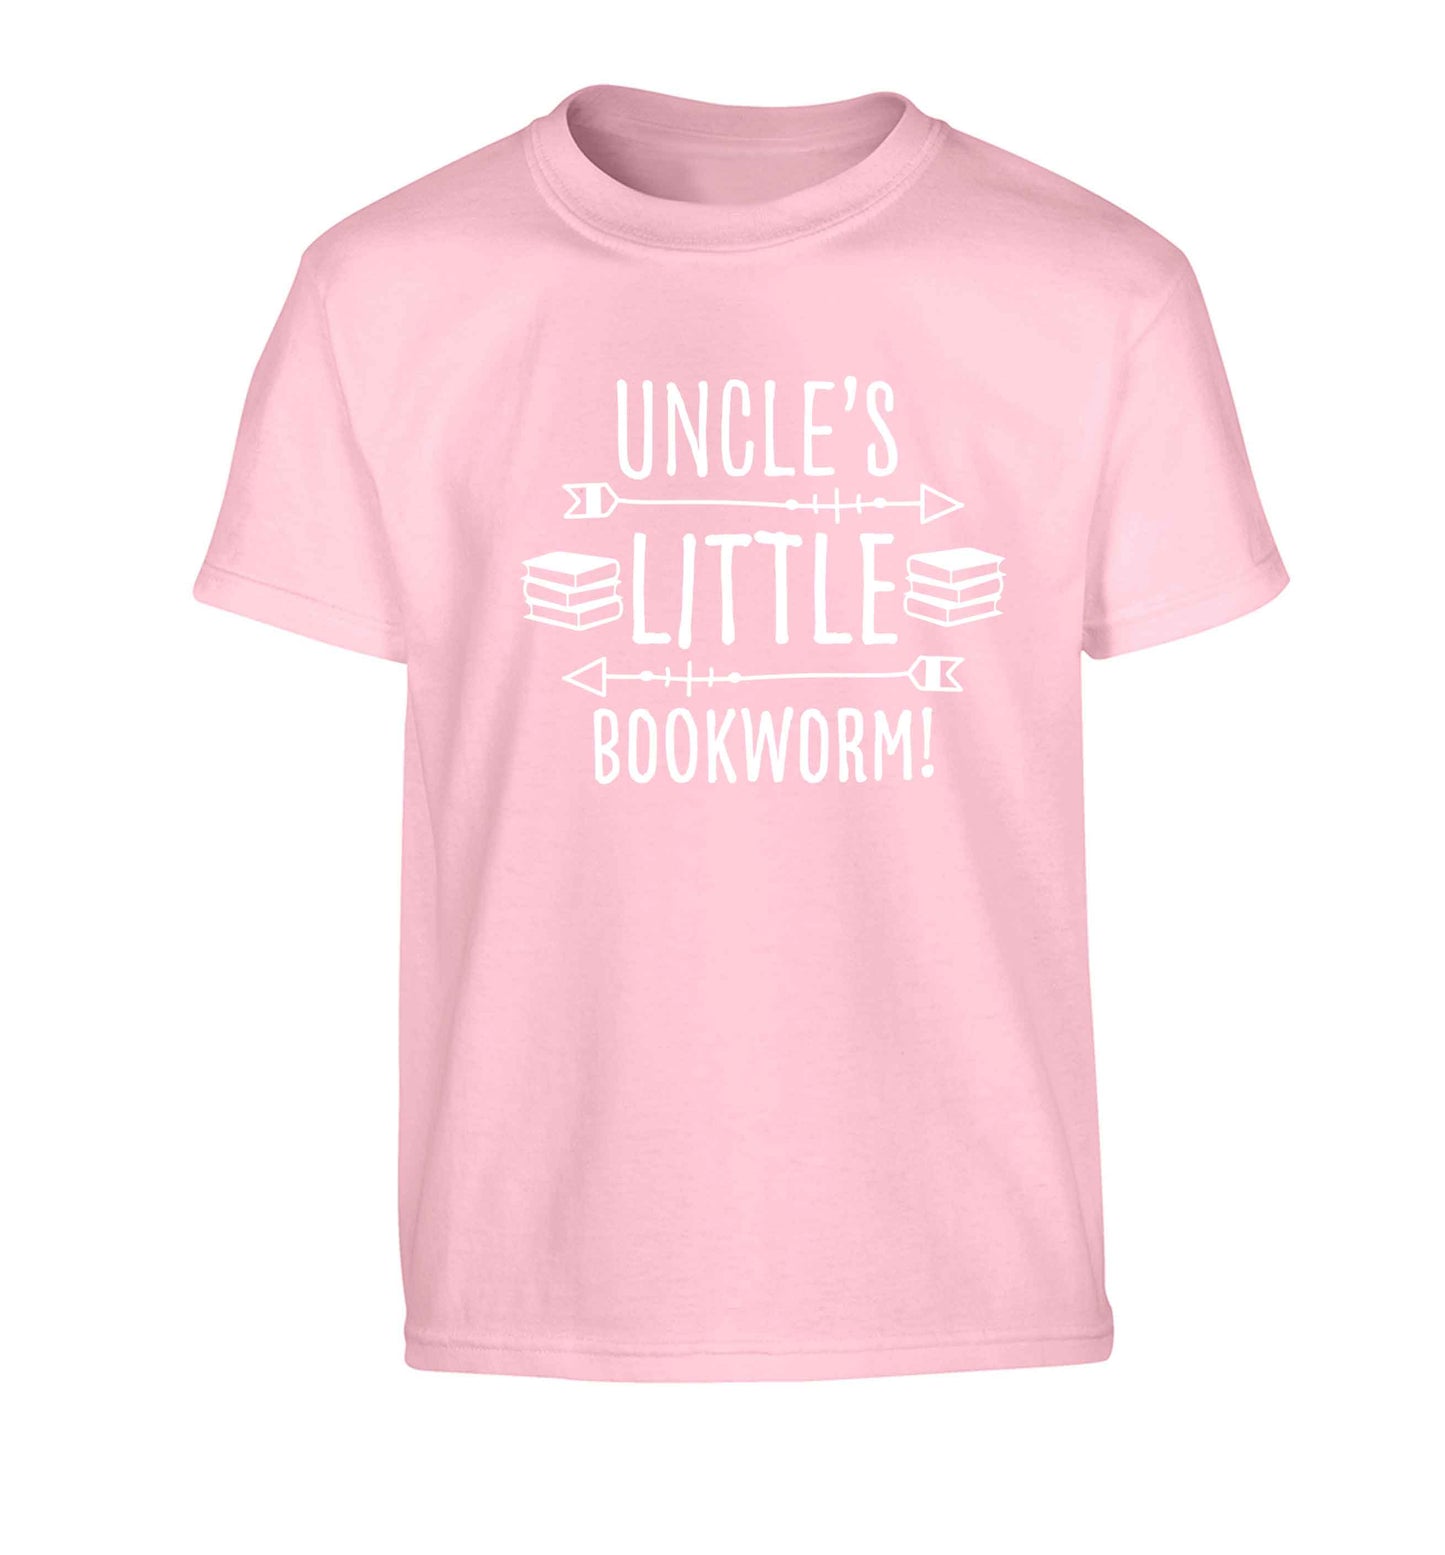 Uncle's little bookworm Children's light pink Tshirt 12-13 Years